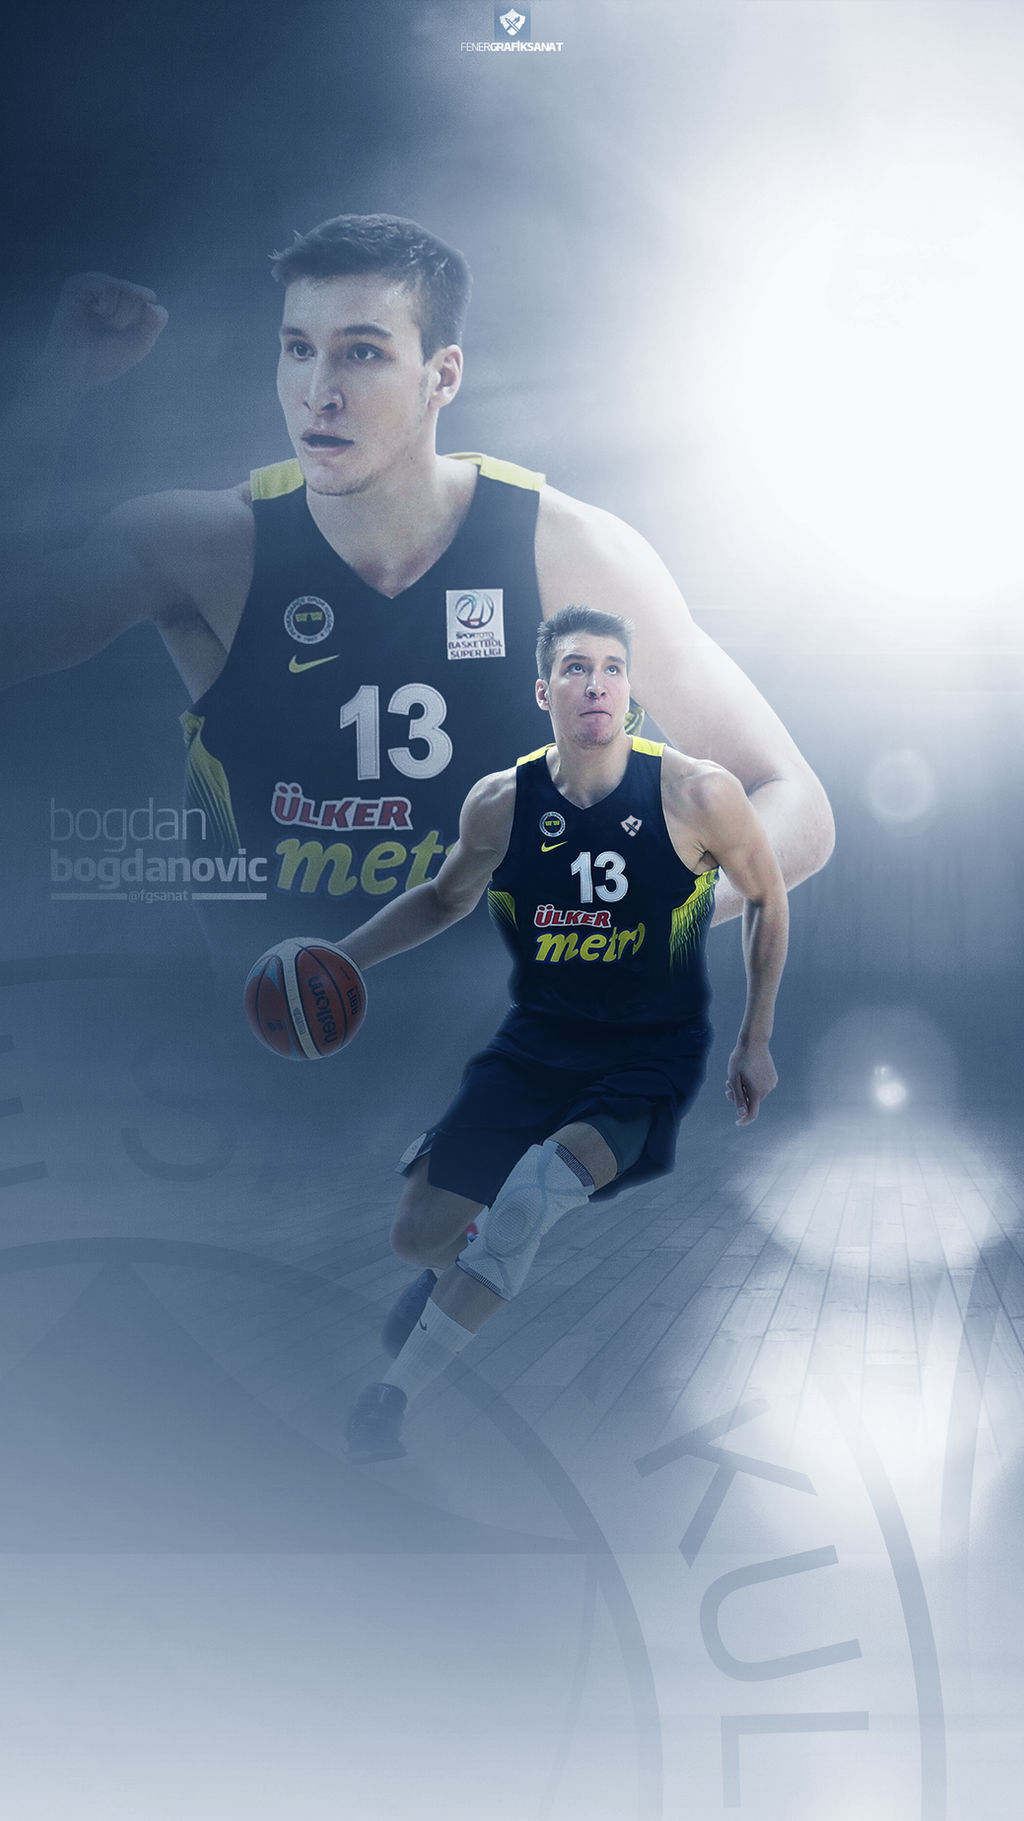 Bogdan bogdanovic basketball hi-res stock photography and images